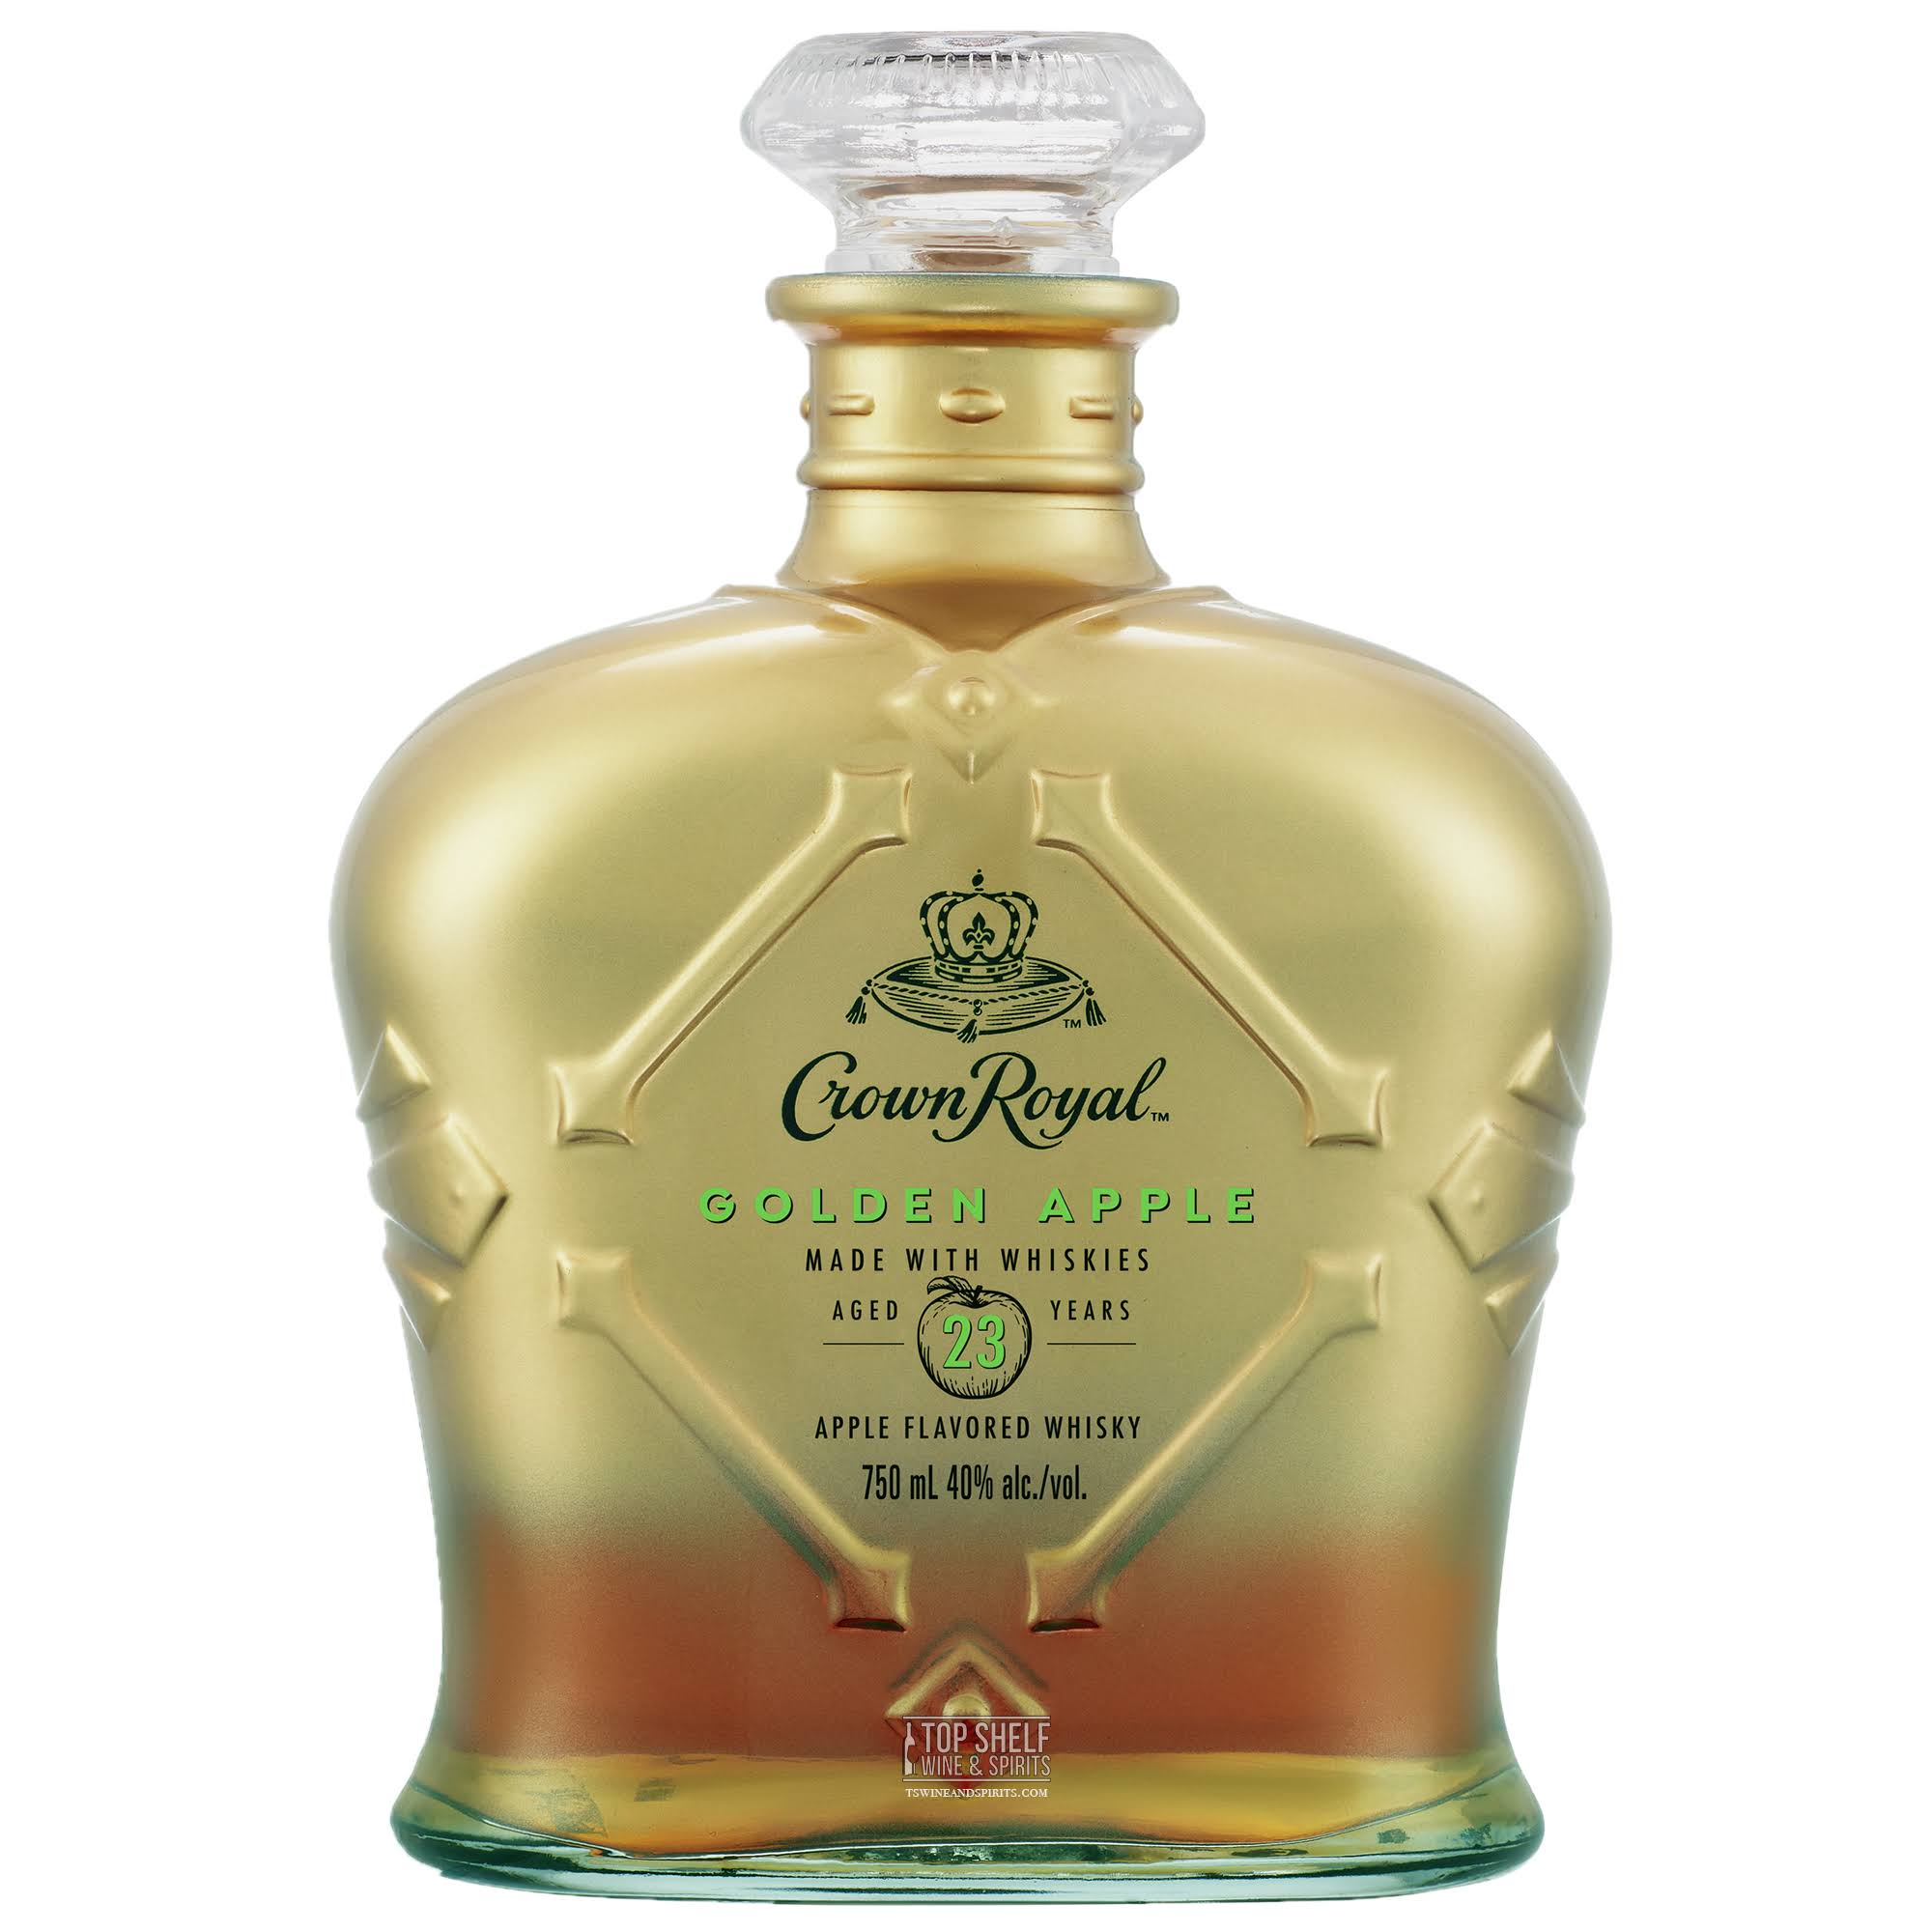 Crown Royal - Golden Apple 23 Year Whisky (750ml)